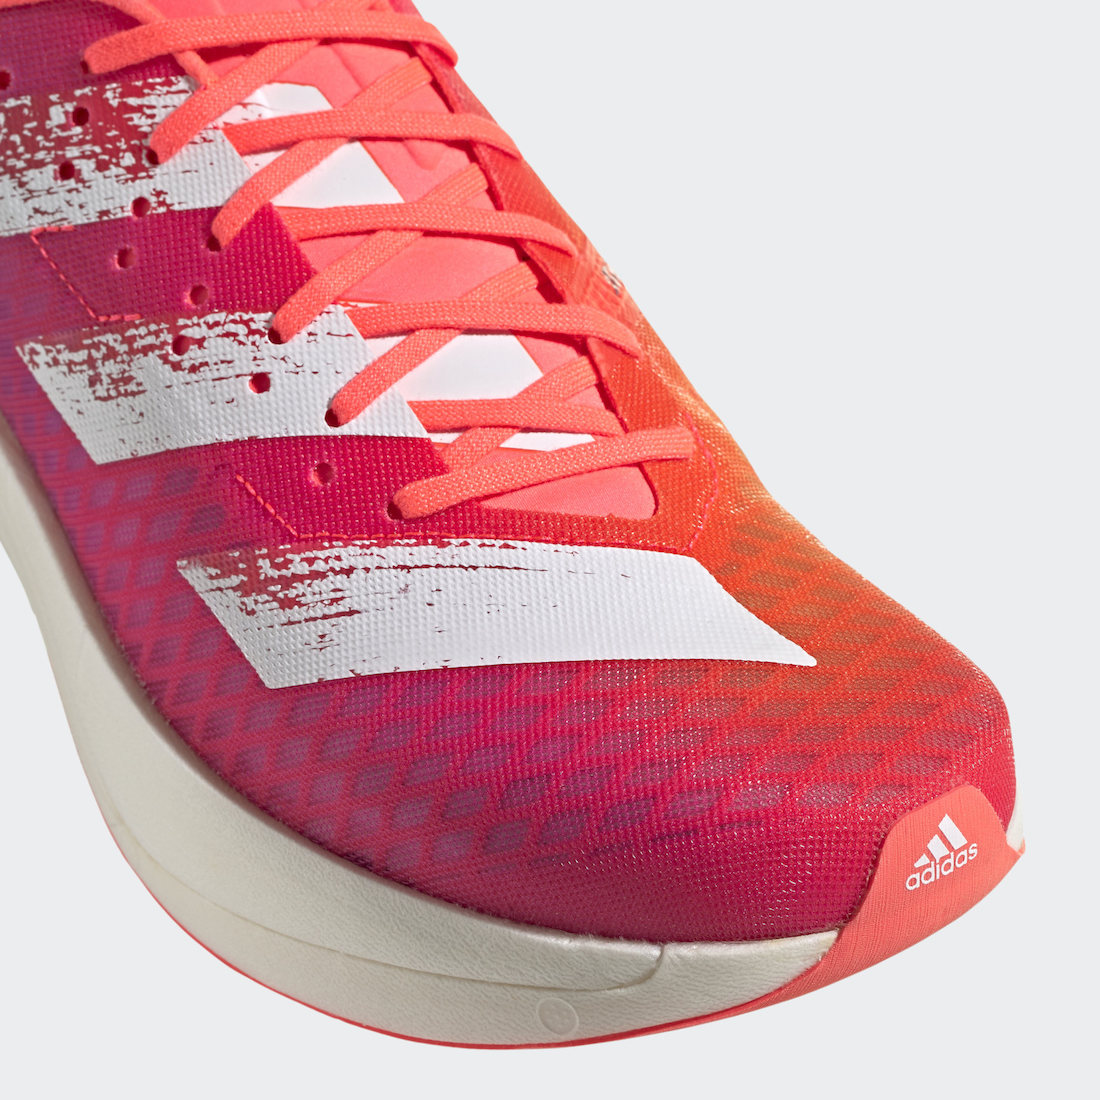 adidas Adizero Adios Pro Signal Pink Shock Pink G55661 Release Date